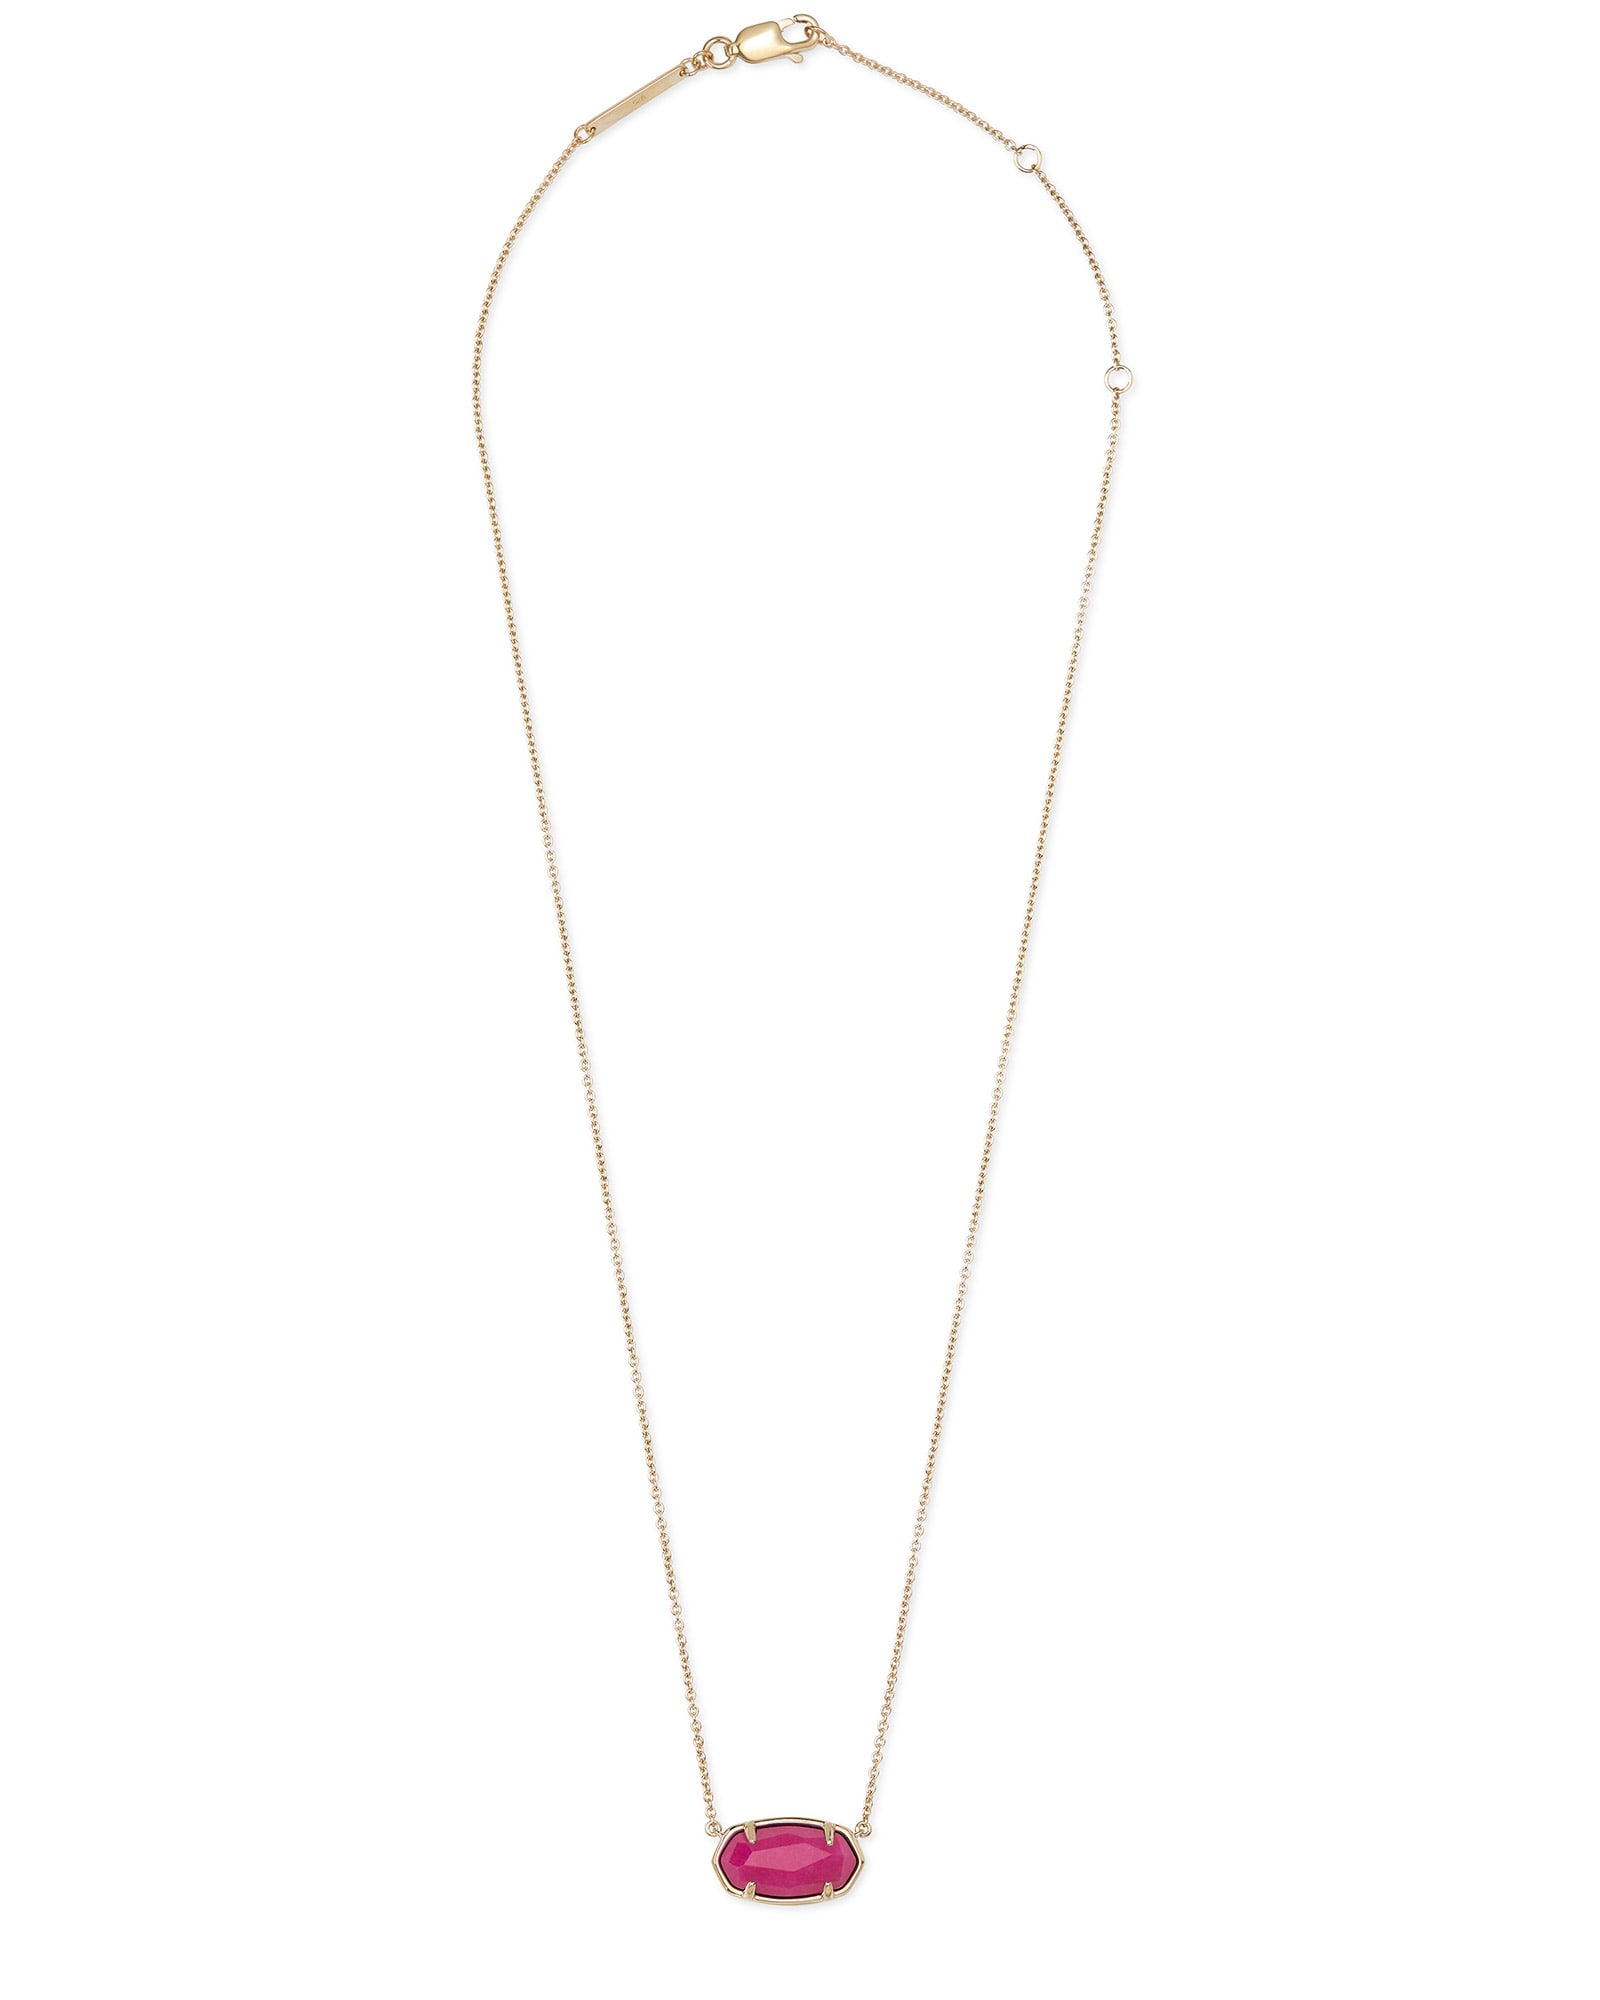 Elisa 18k Gold Vermeil Pendant Necklace in Pink Quartzite | Kendra